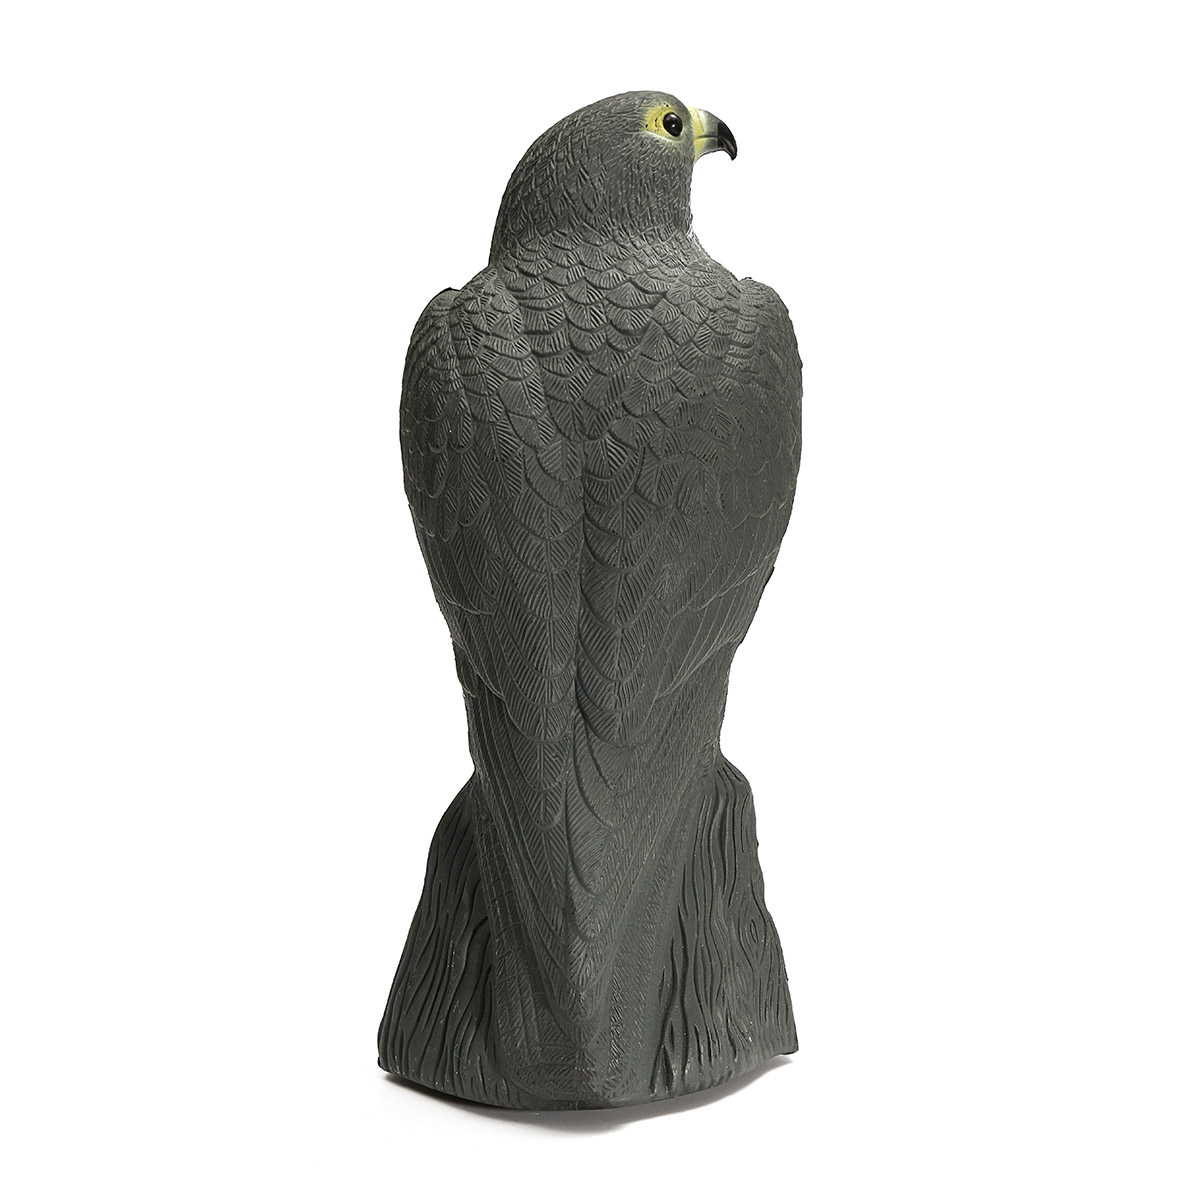 Simulation Falcon Hawk Decoy Bird Pigeon Deterrent Scarer Repeller Garden Lawn Decor Hallowmas Decoration